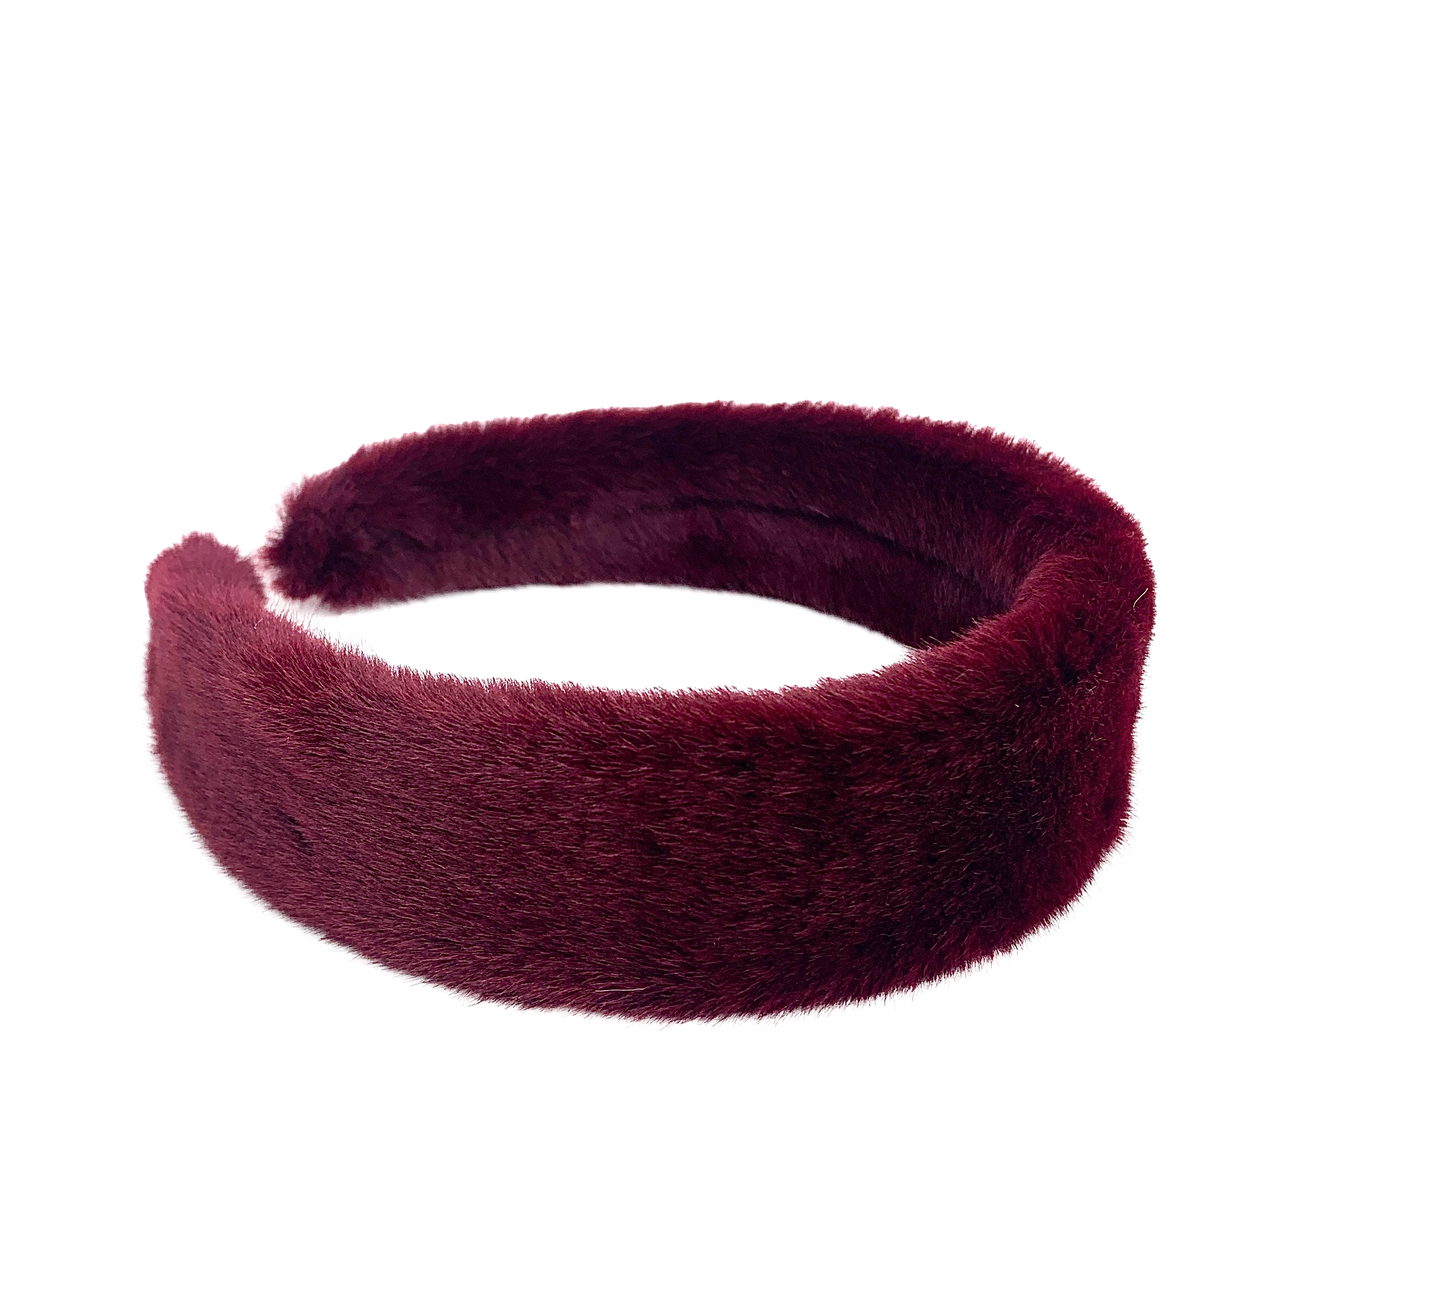 Furry headband in dark red color